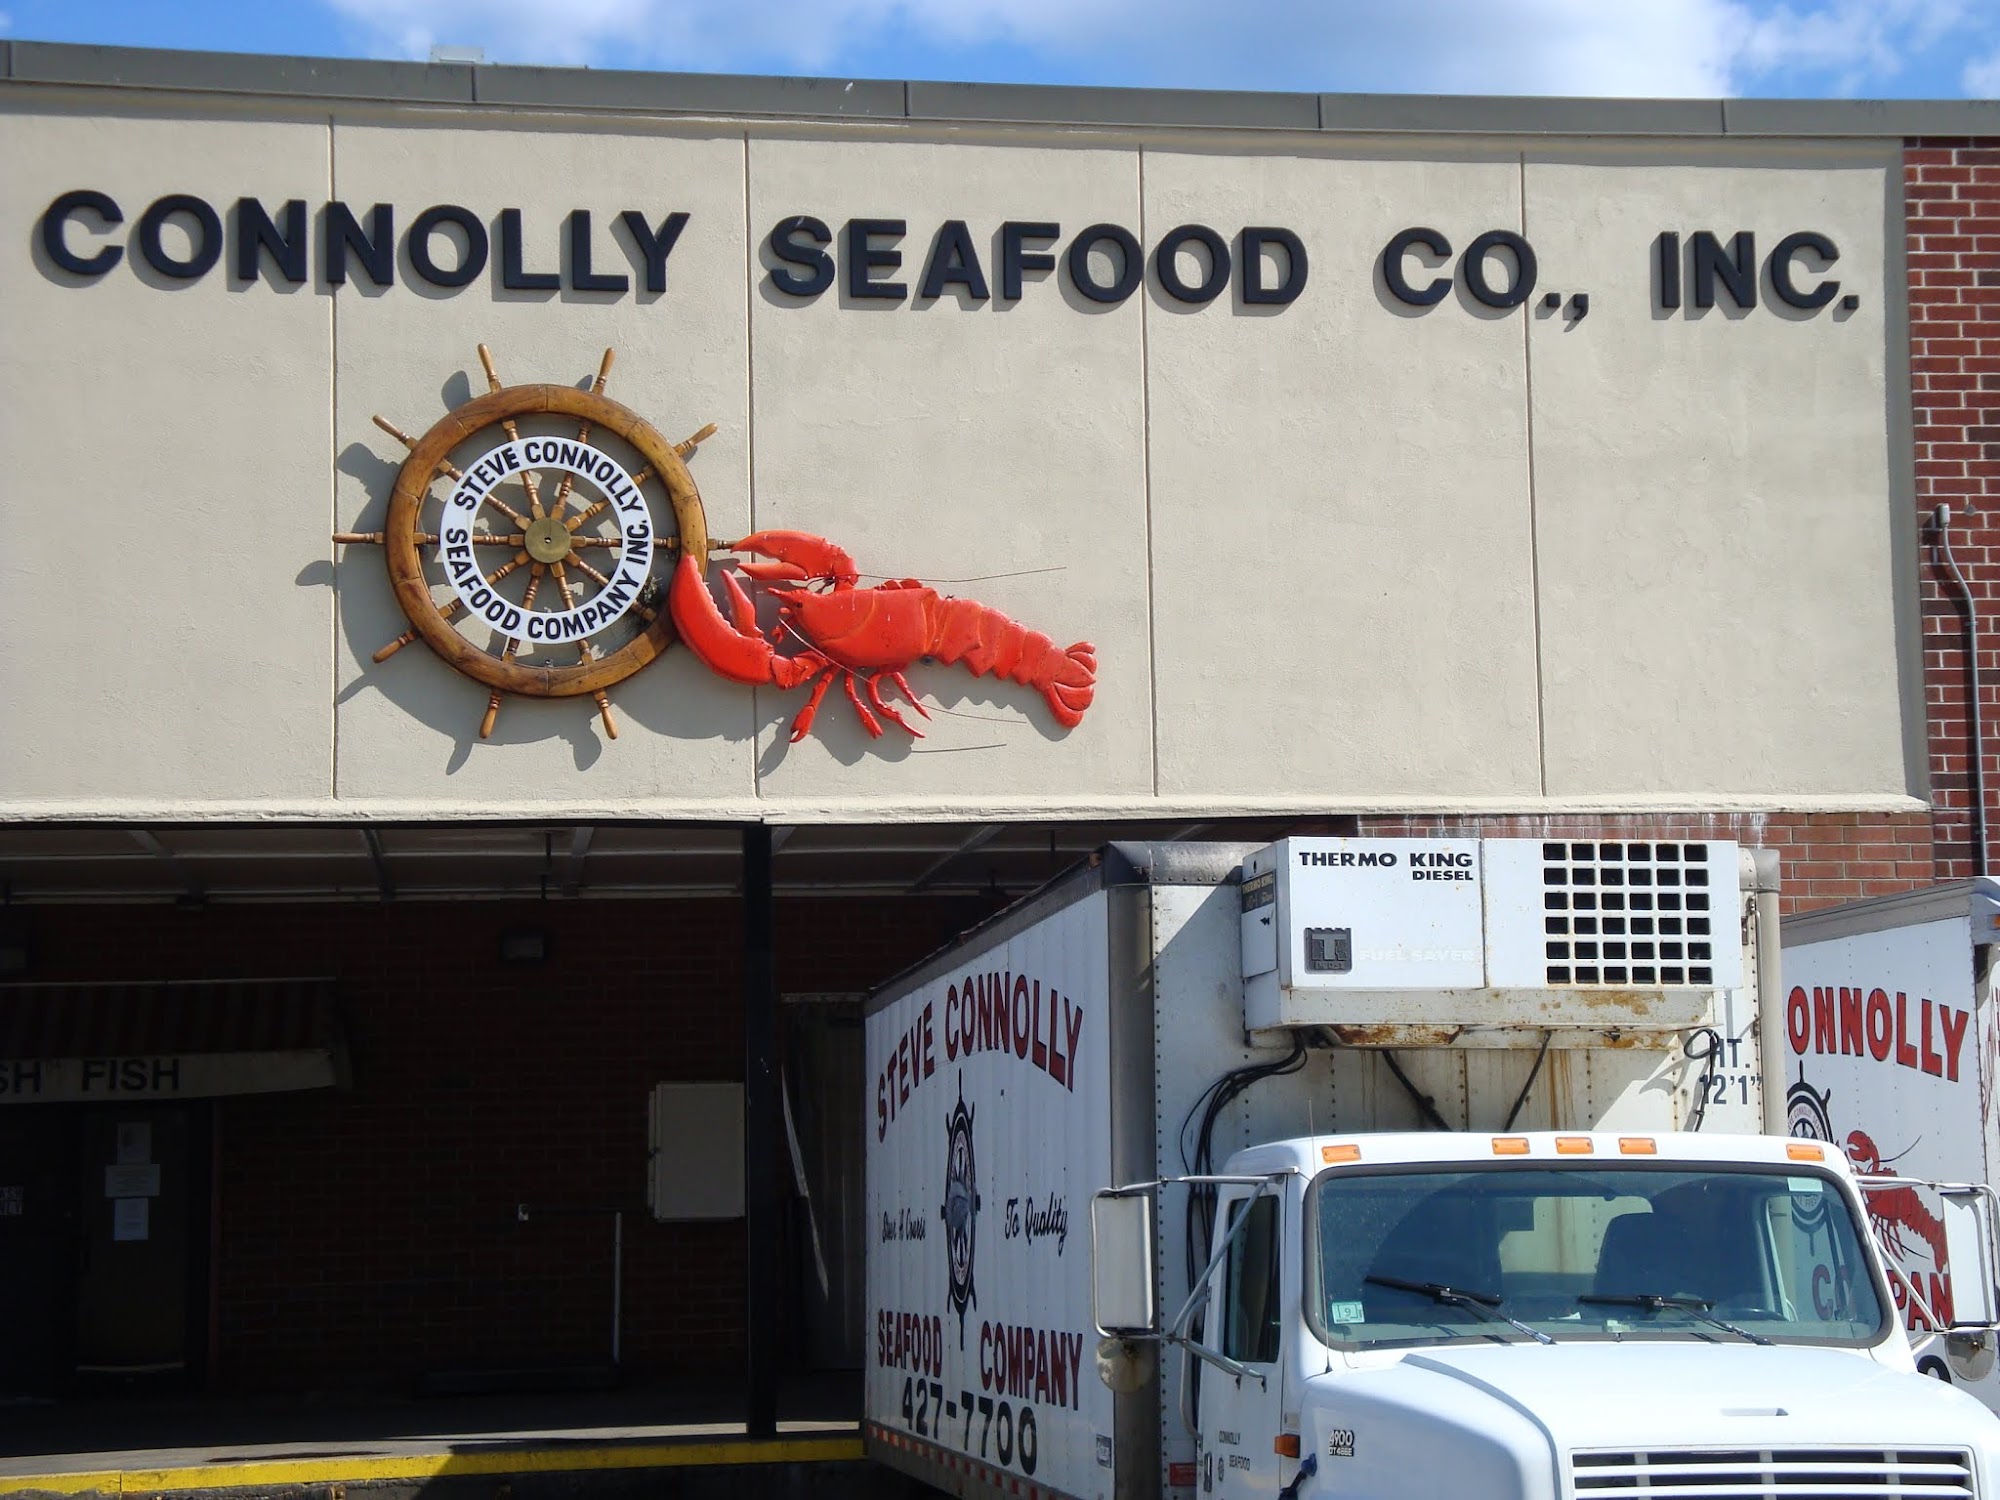 Steve Connolly Seafood Co Inc